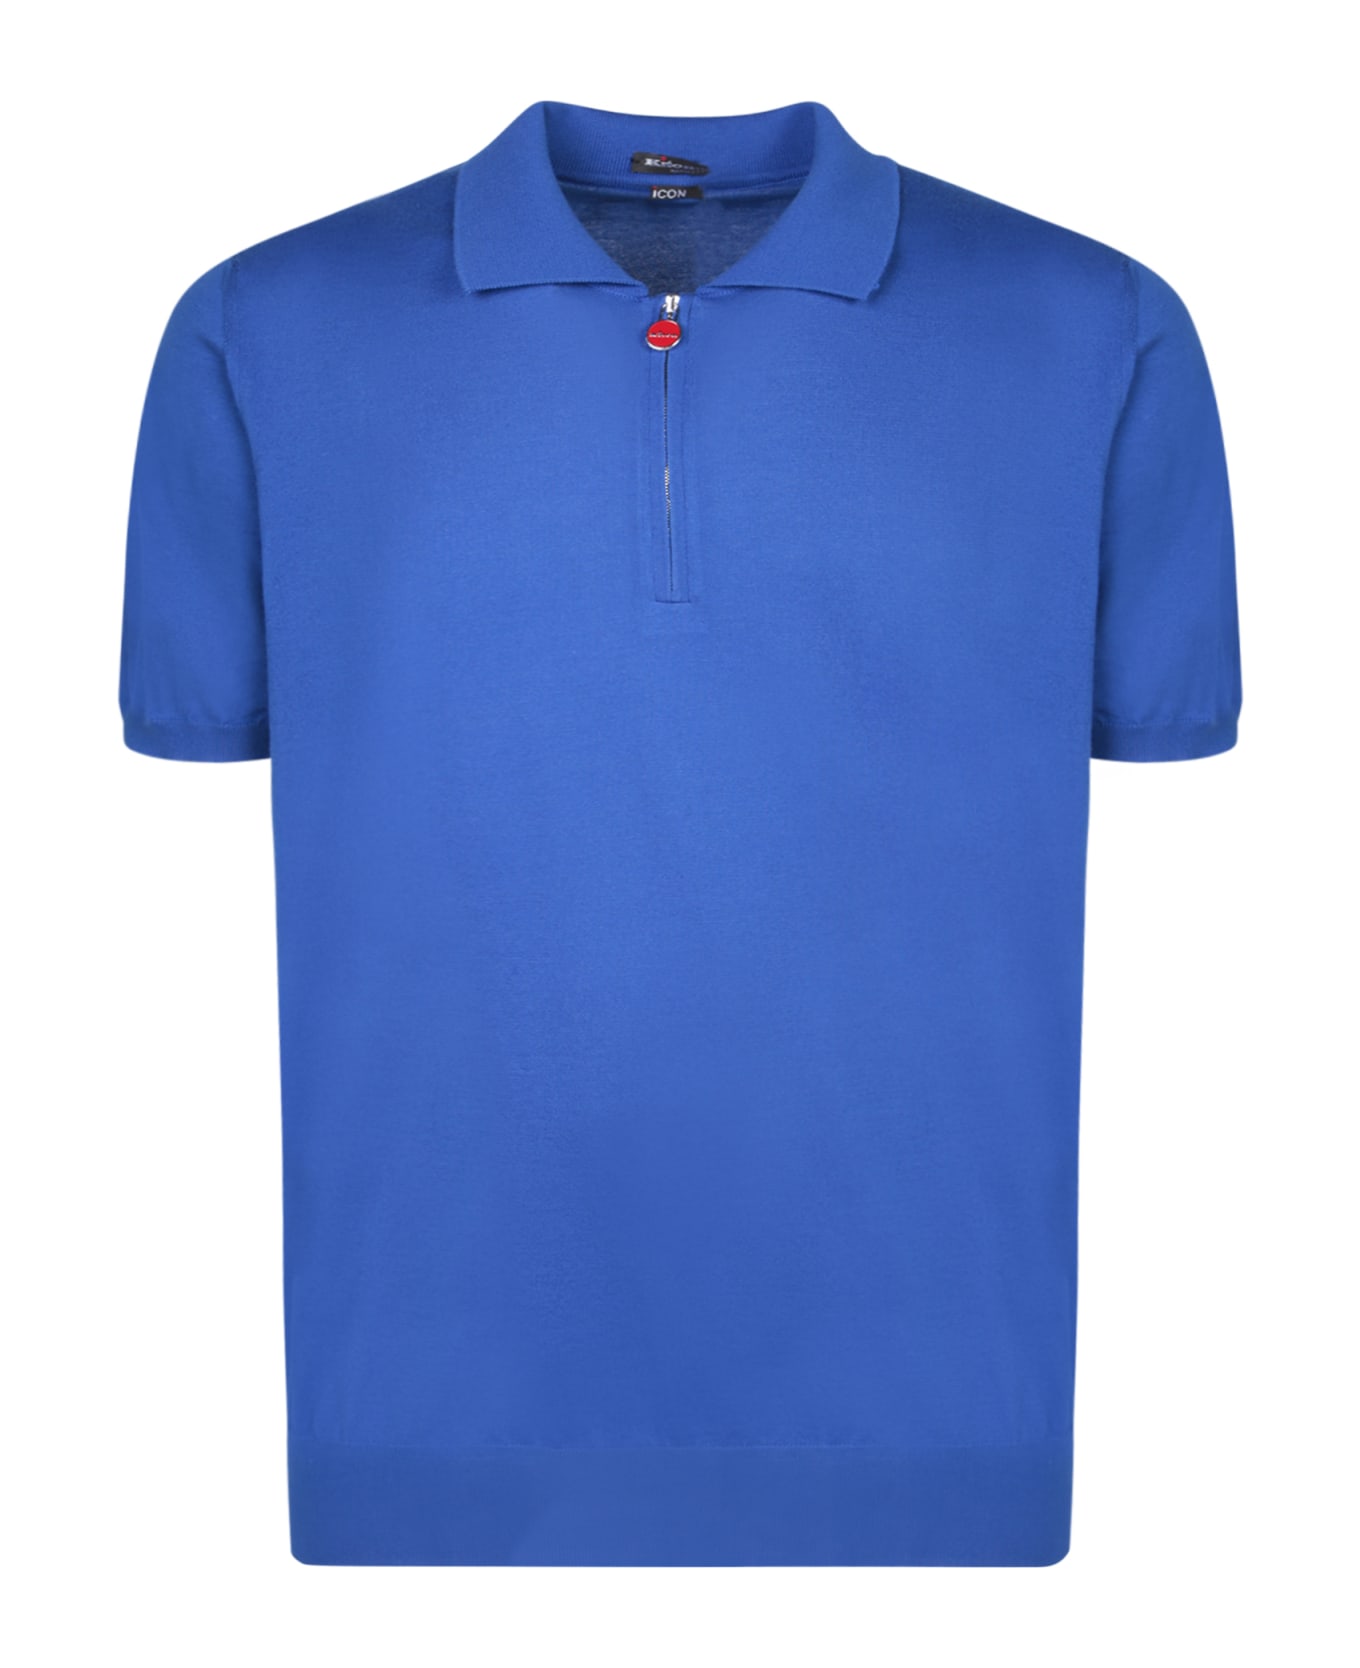 Kiton Iconic Electric Blue Cotton Polo Shirt - Blue ポロシャツ